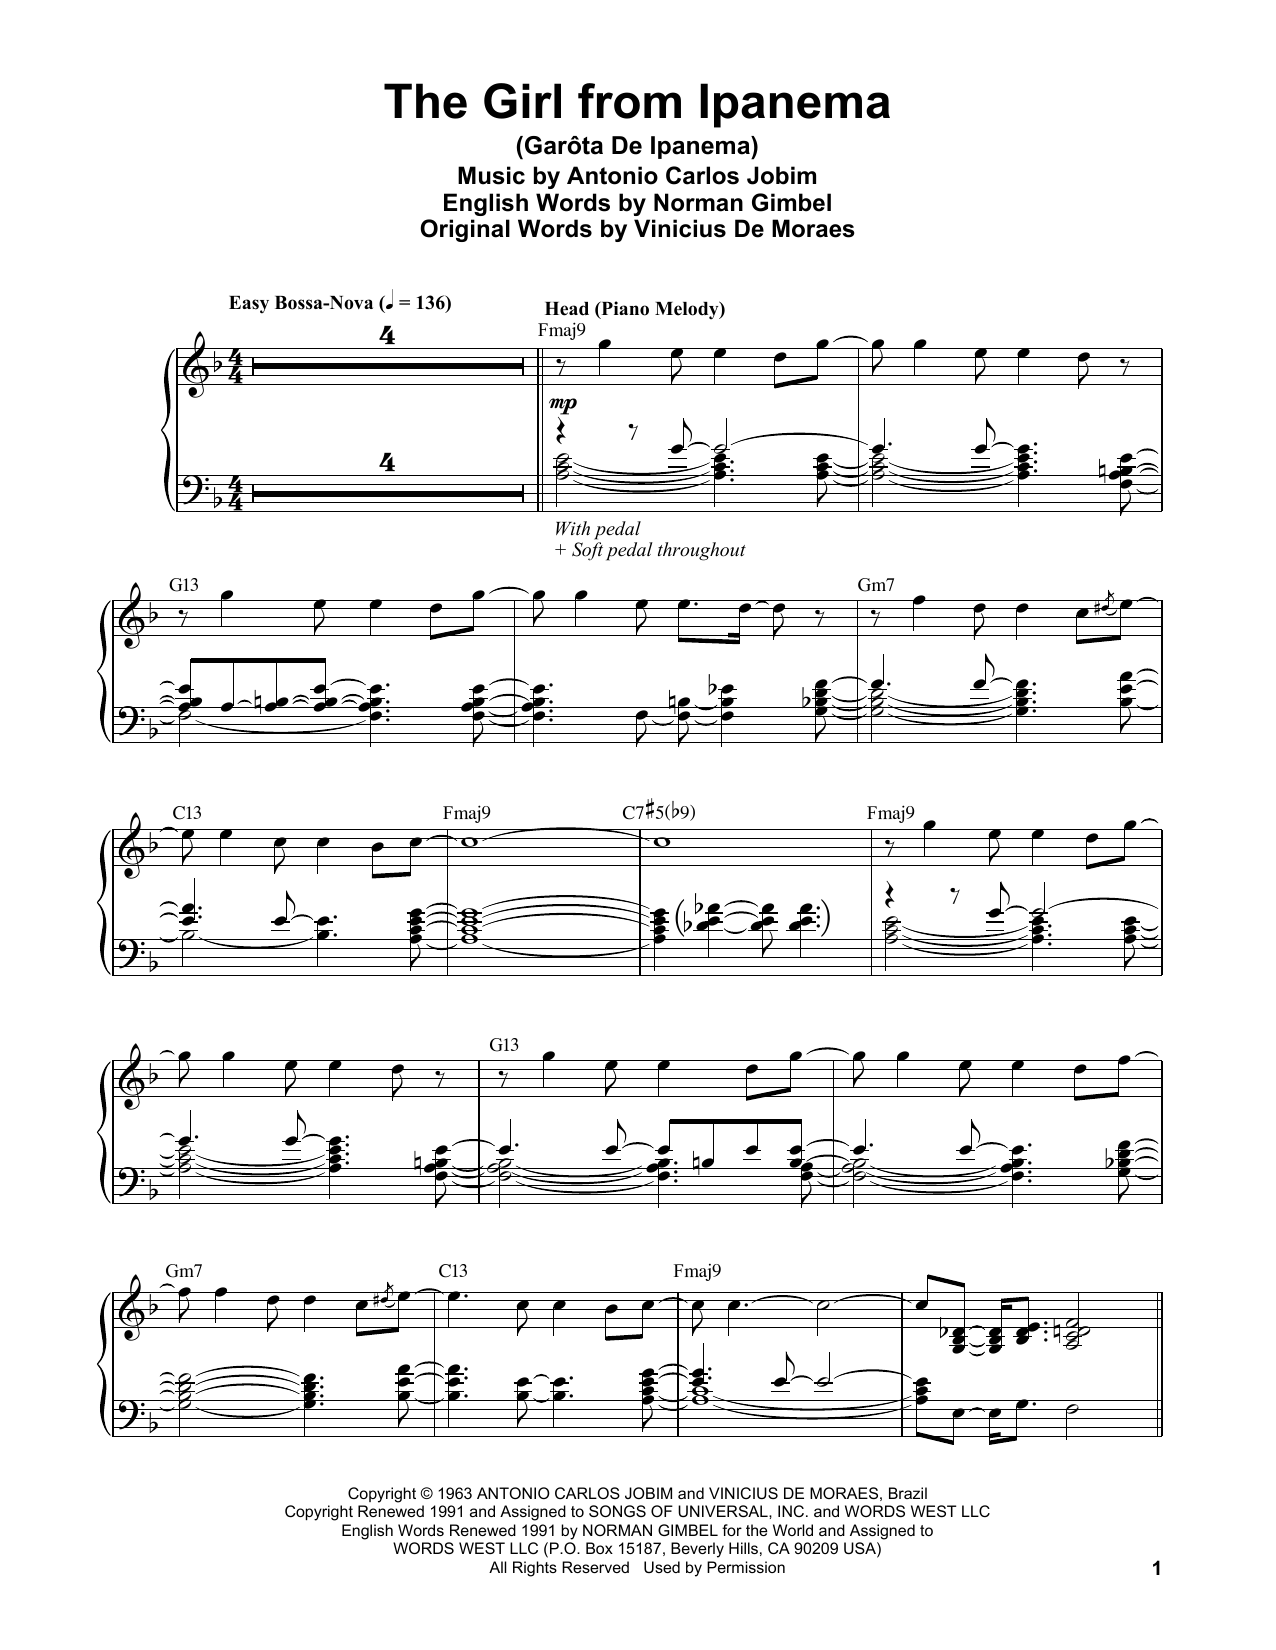 Download Vince Guaraldi The Girl From Ipanema (Garota De Ipanema) Sheet Music and learn how to play Piano Transcription PDF digital score in minutes